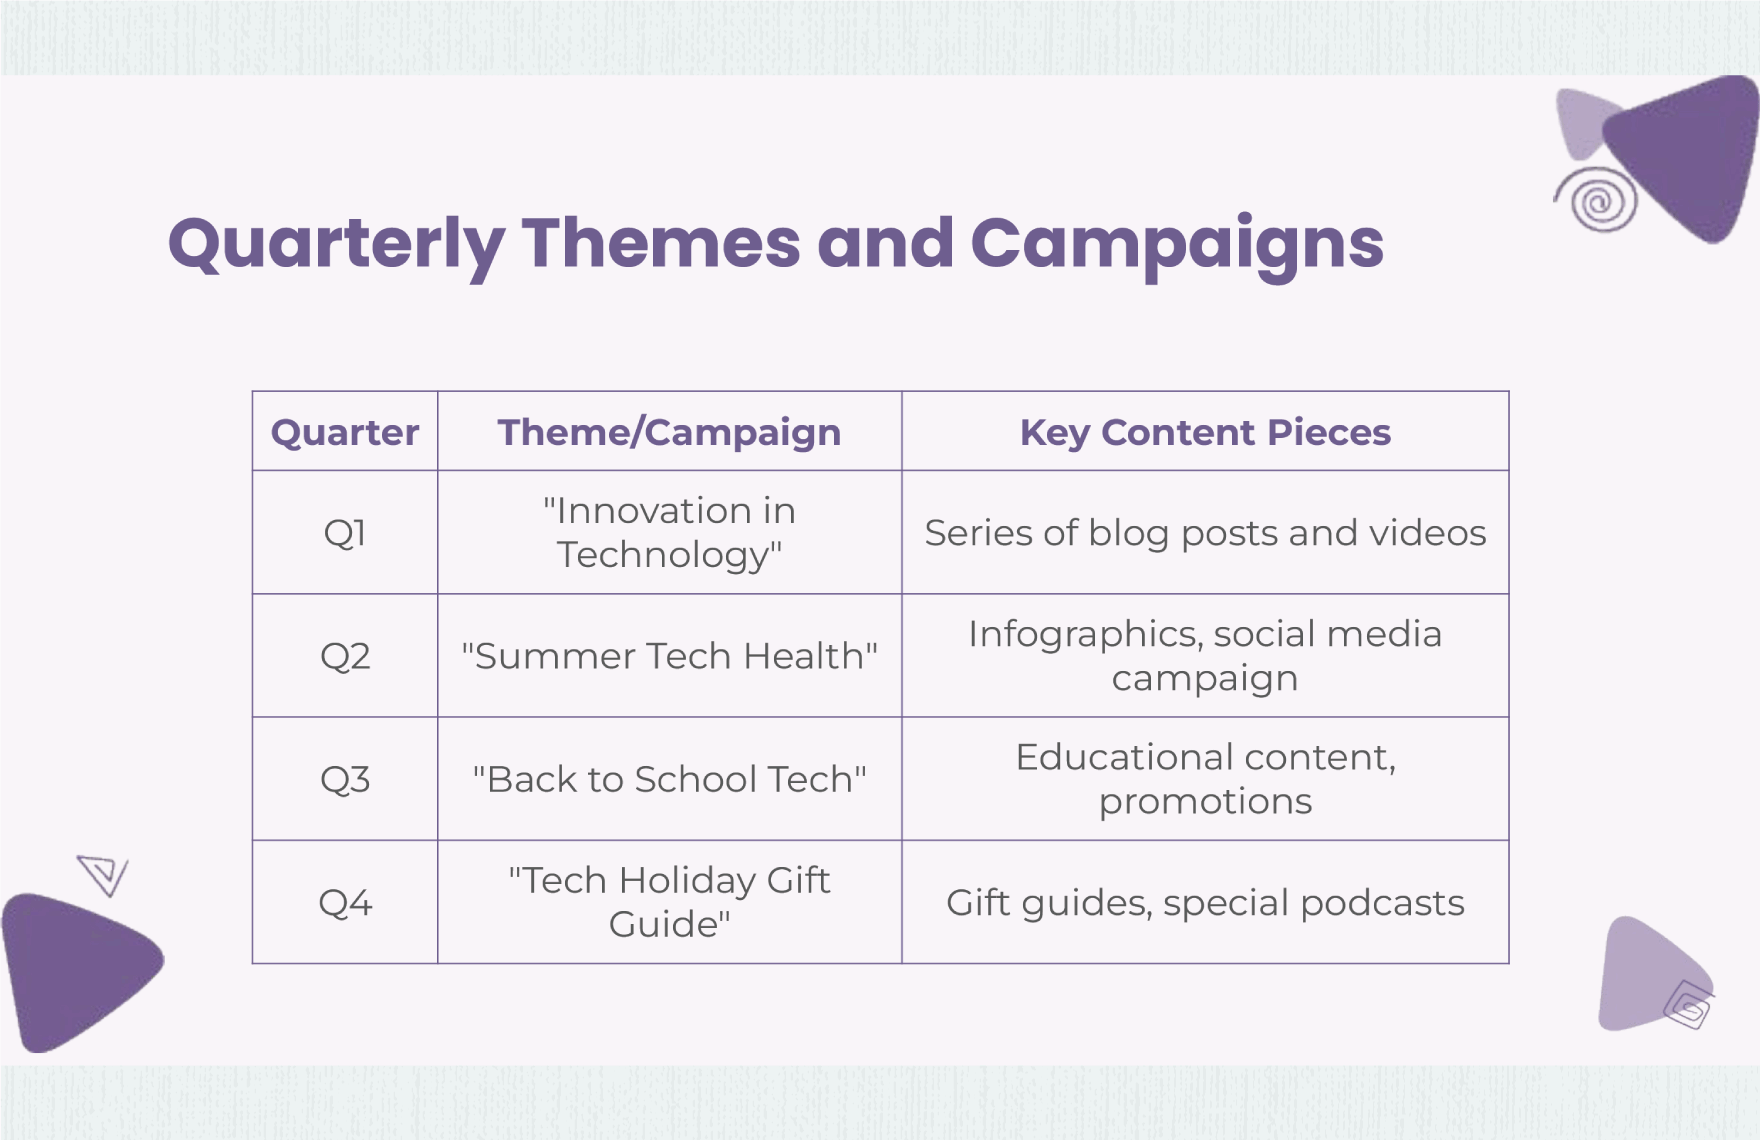 Content Marketing Plan and Calendar Presentation Template